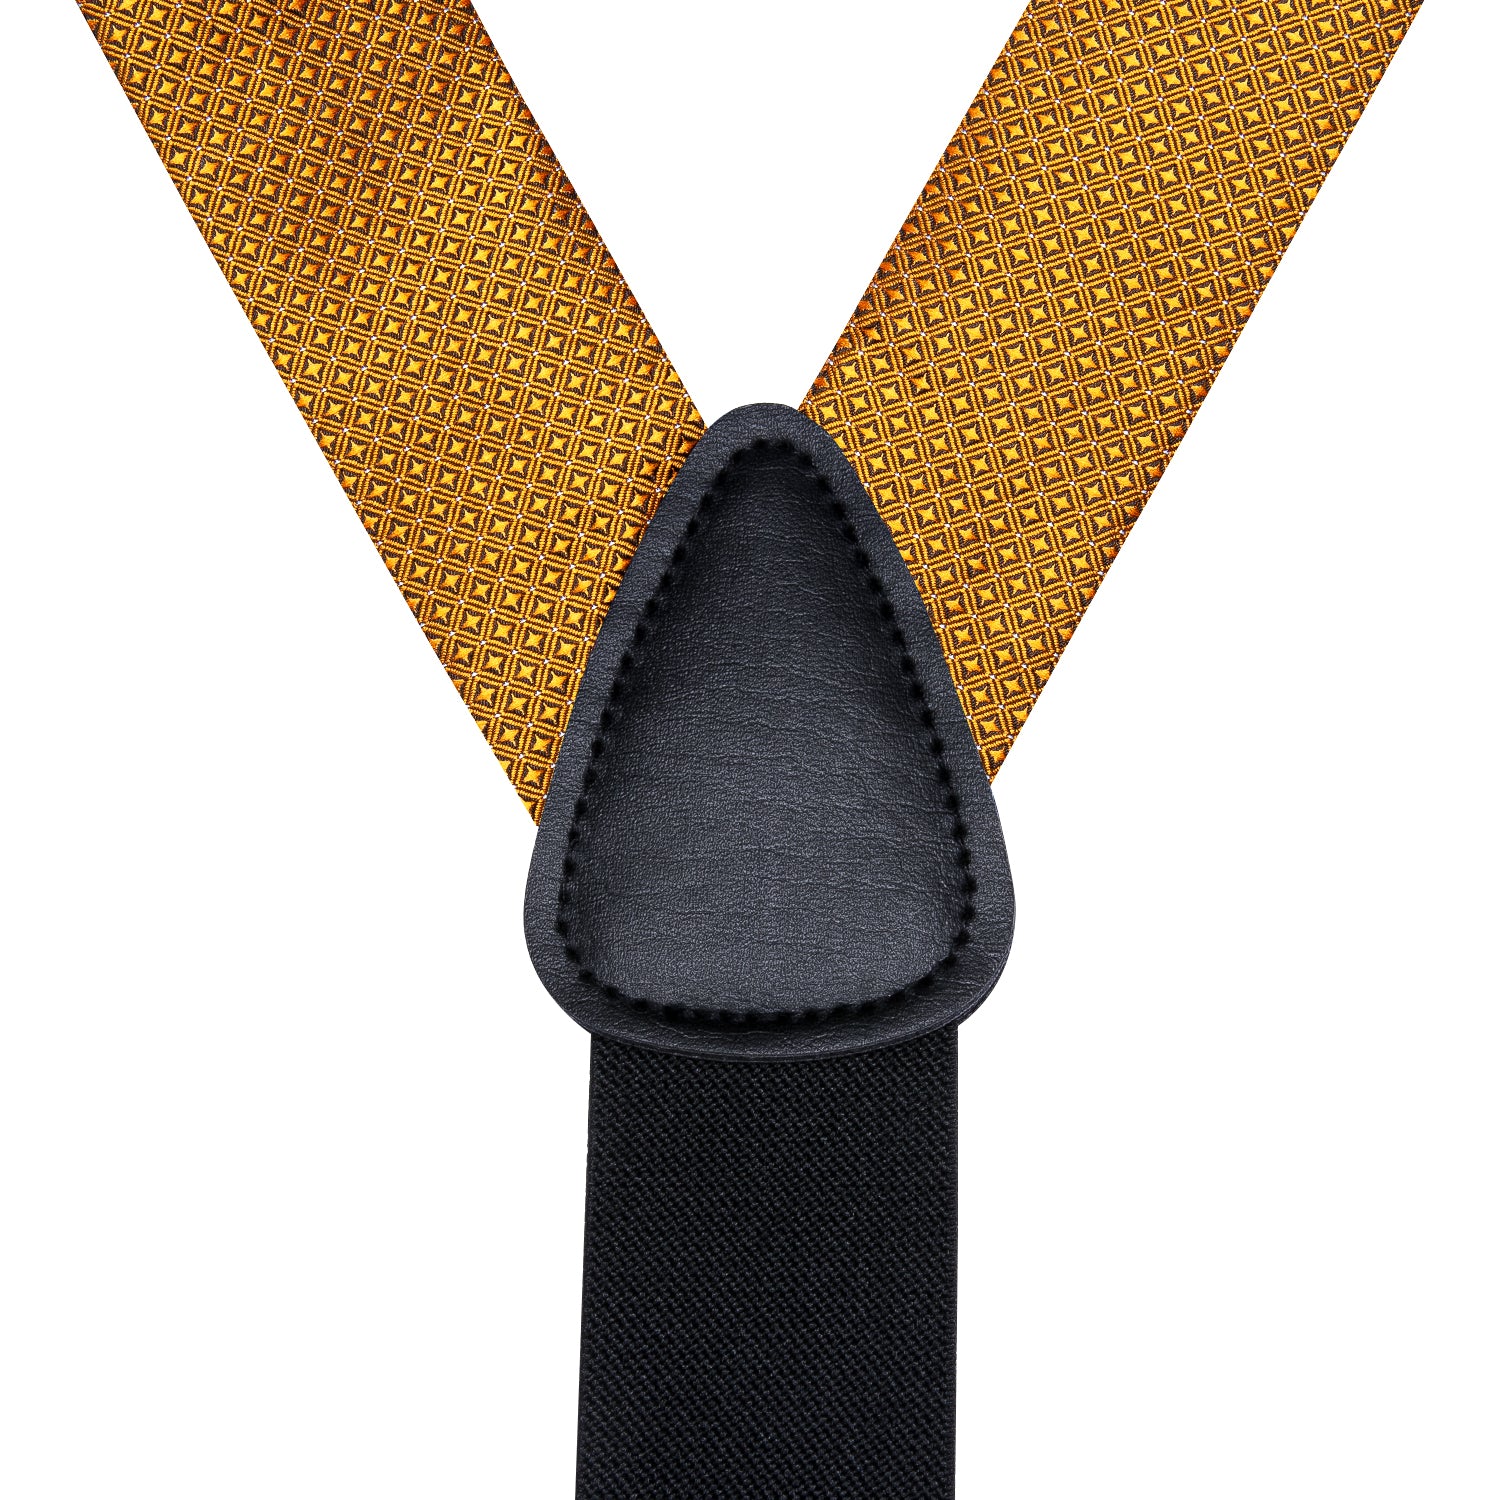 New Golden Paisley Men's Suspender Bowtie Pocket Square Cufflinks Set